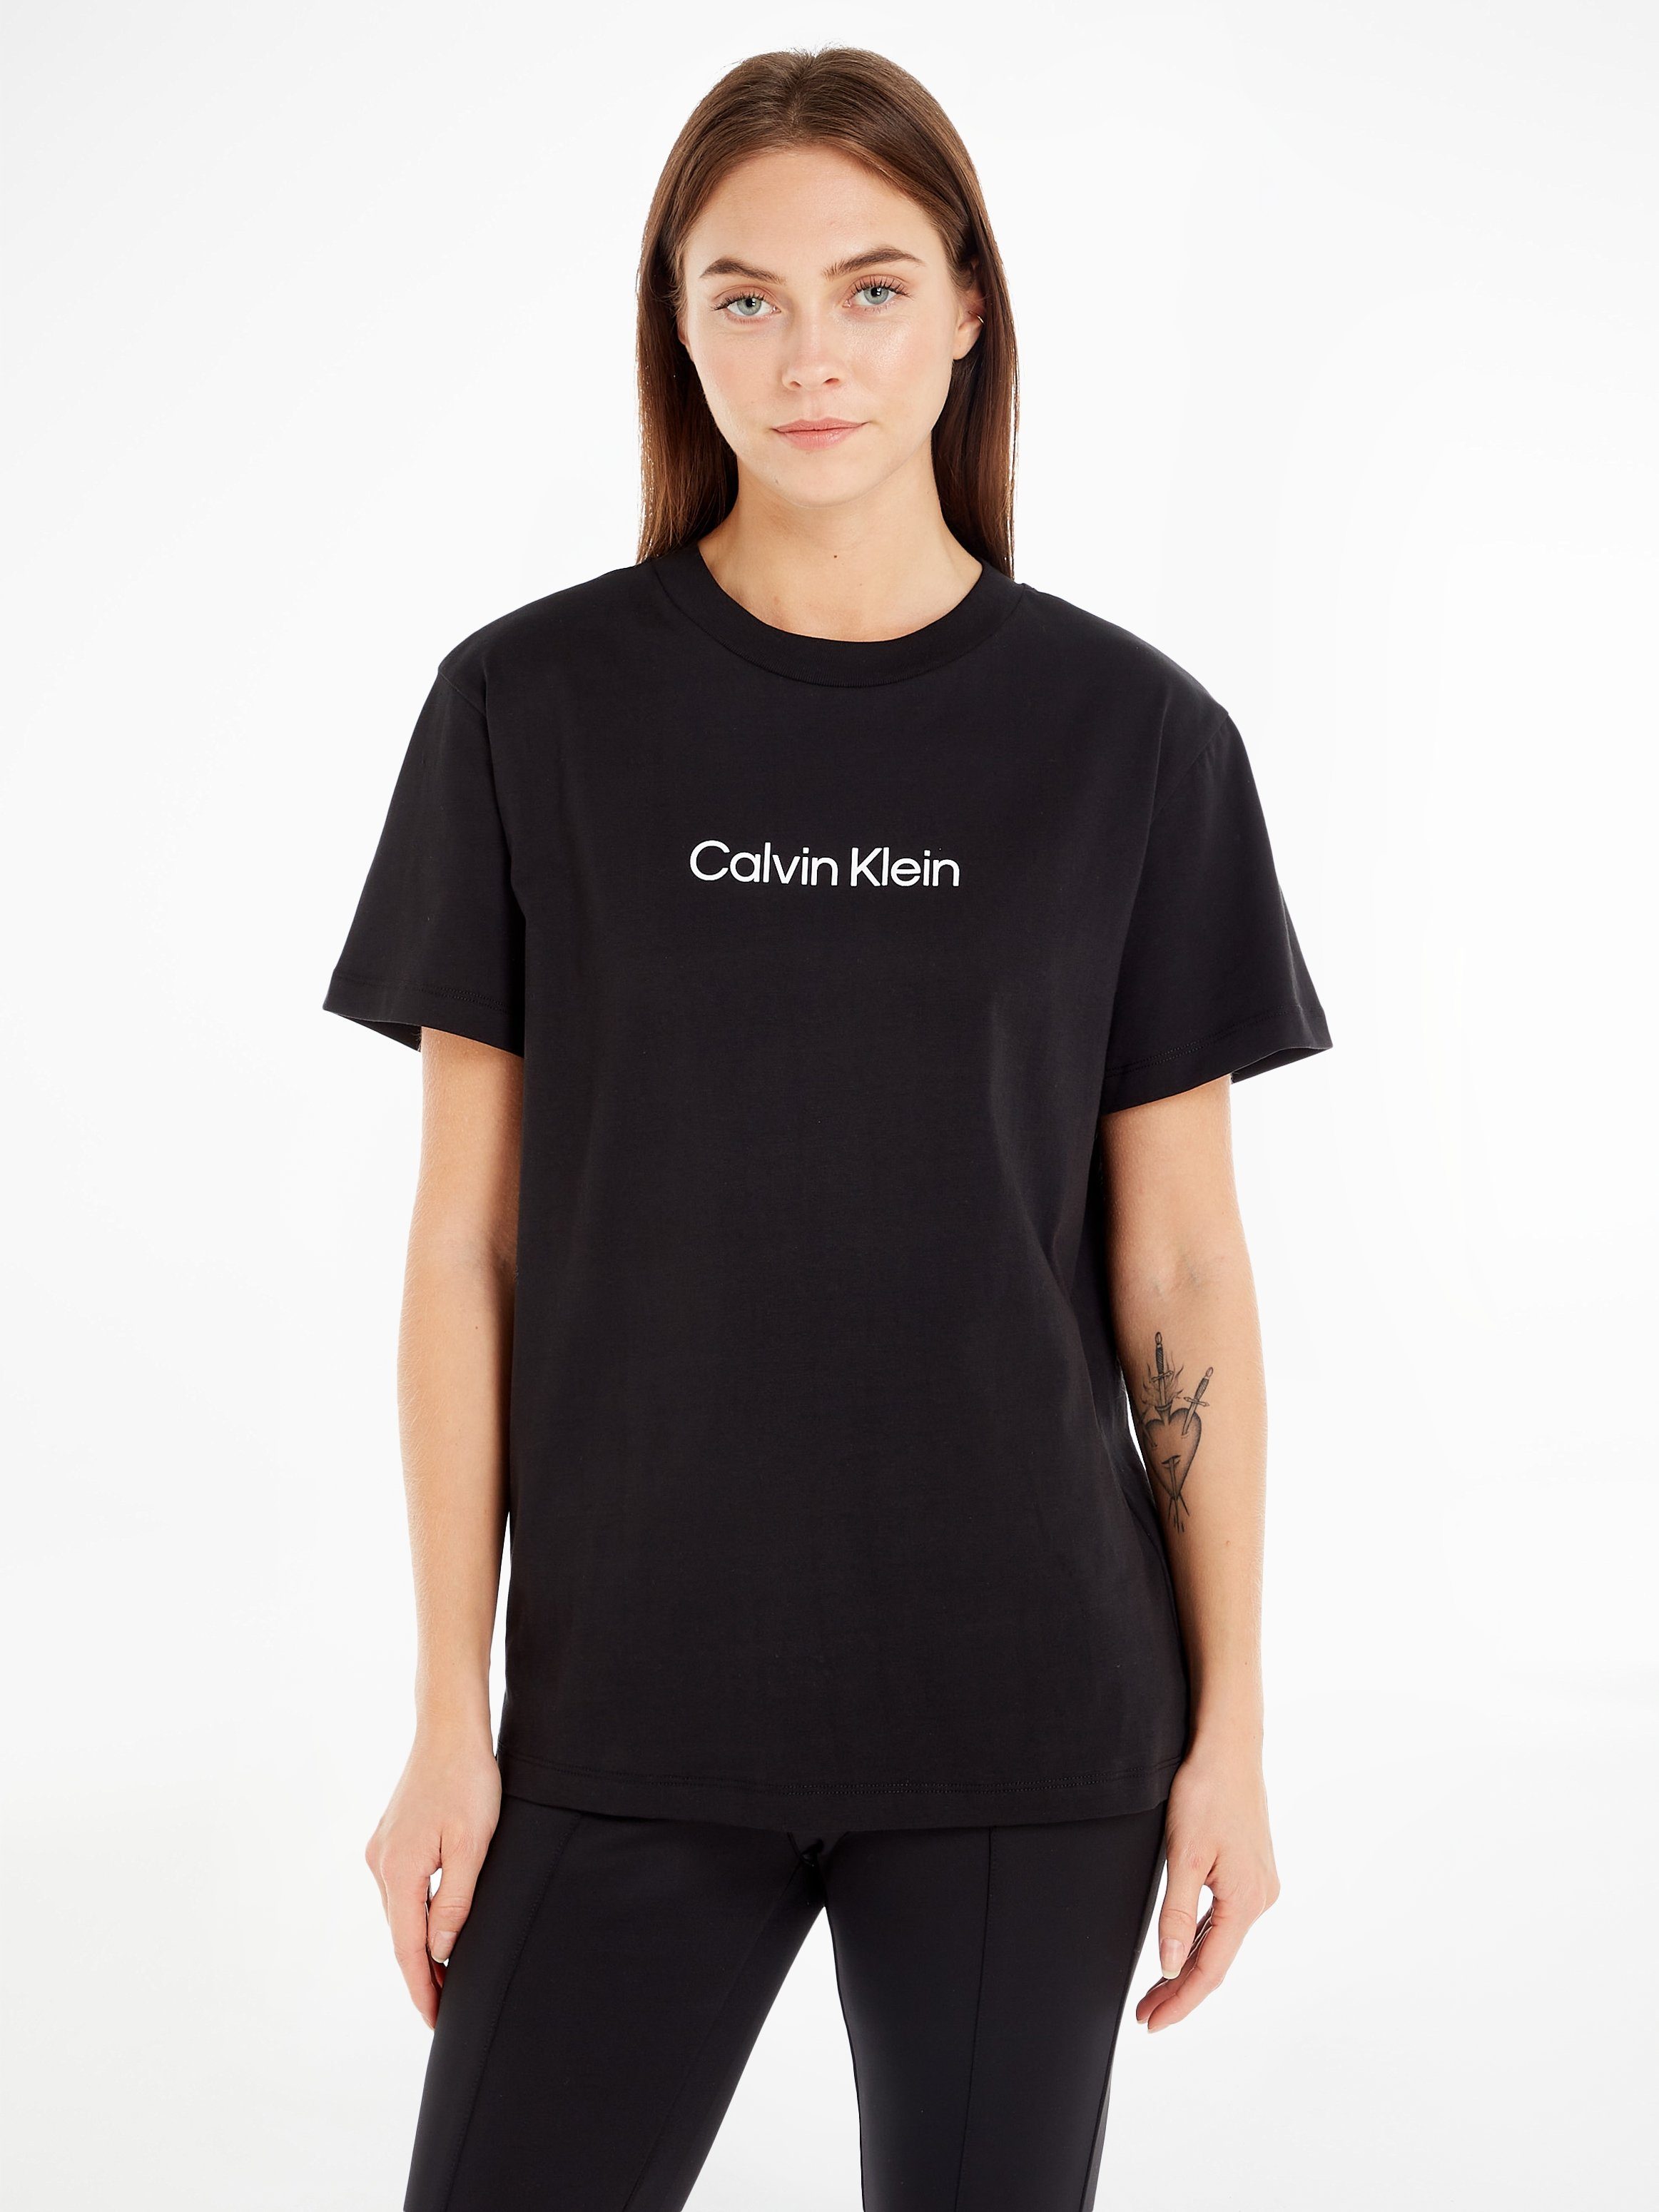 LOGO T-Shirt Shirt Klein HERO Calvin REGULAR